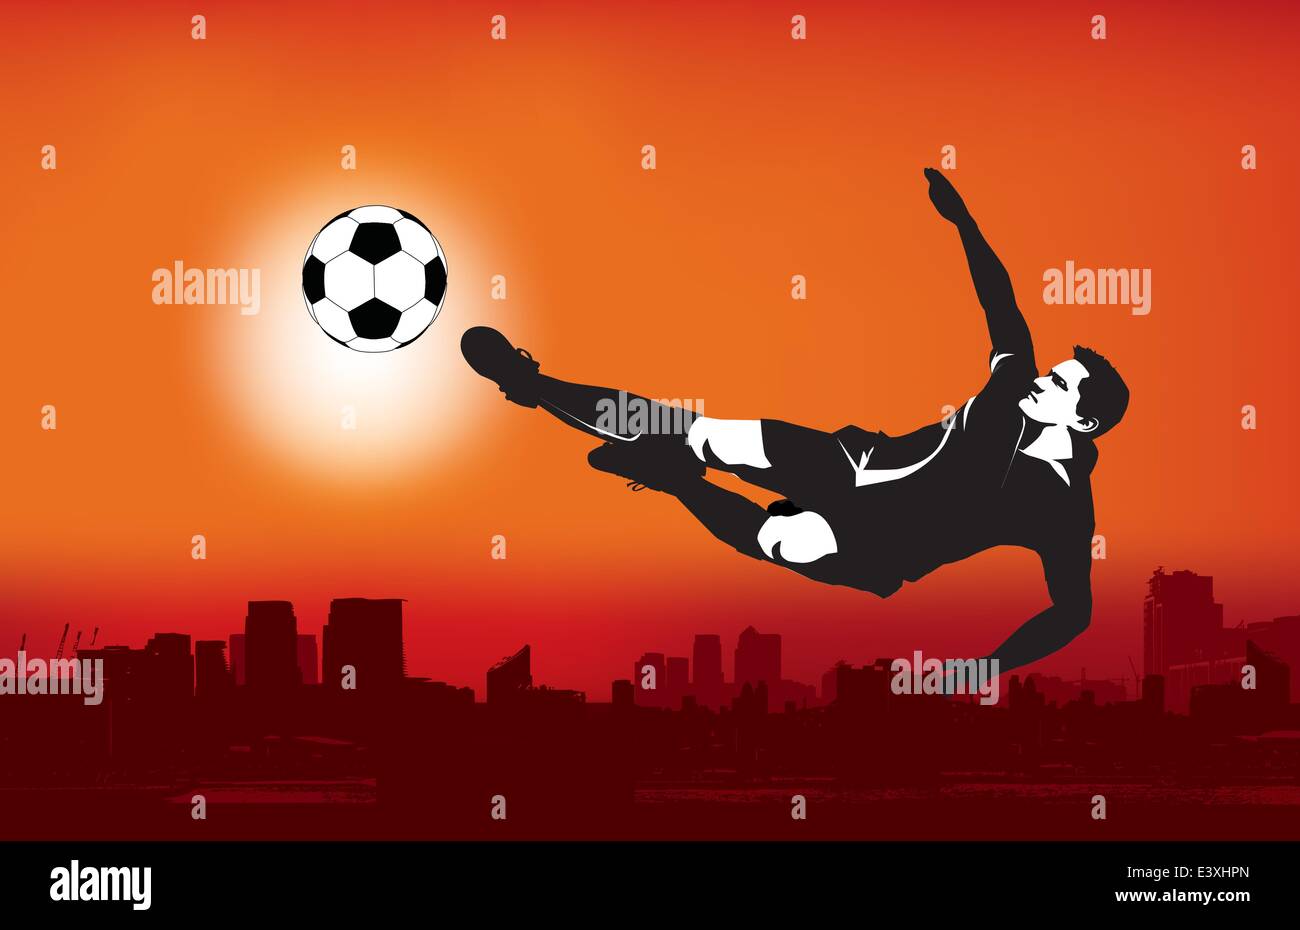 grunge style football illustration of flying kick above city Stock Vector